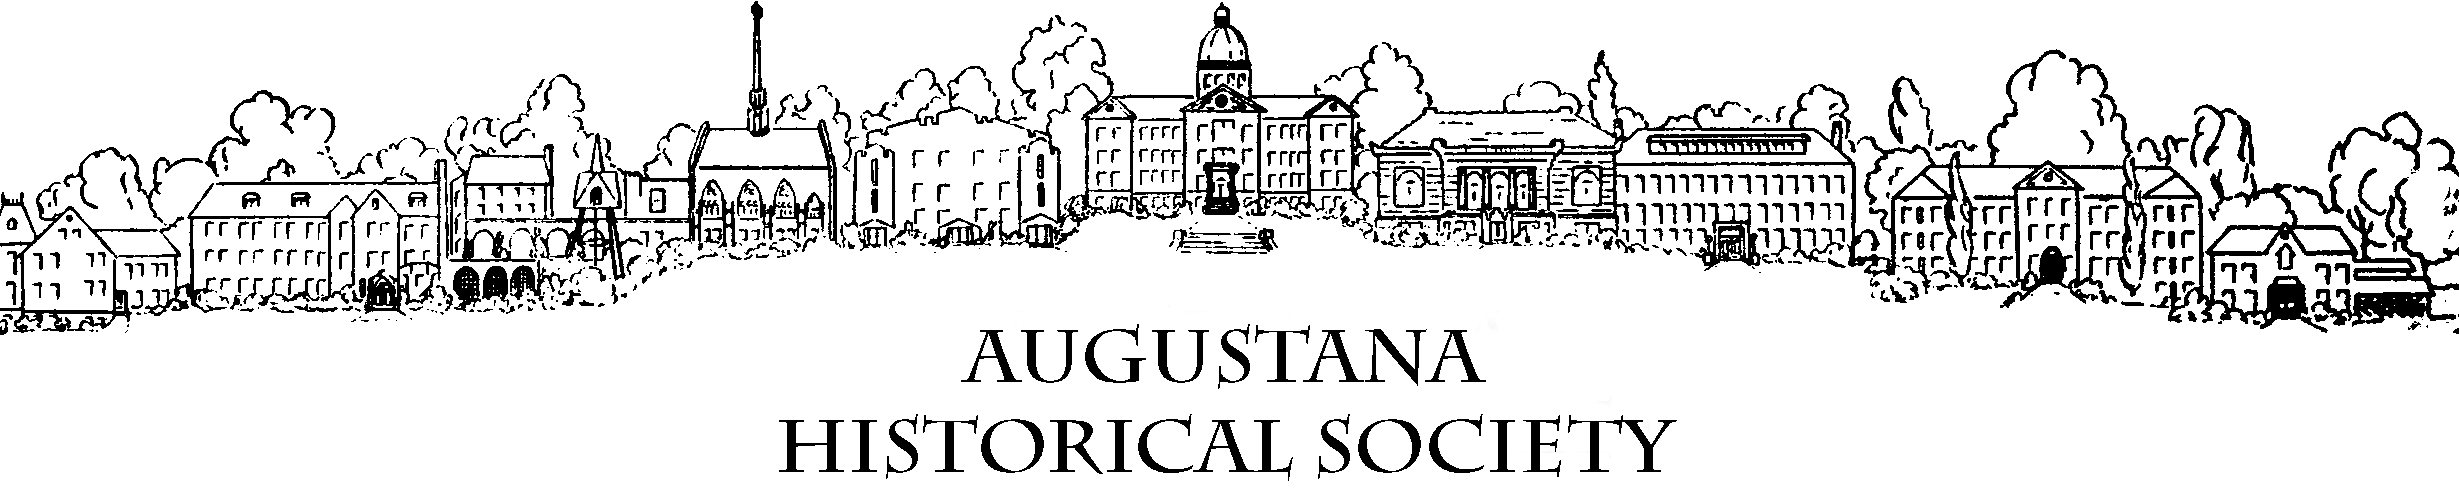 Augustana Historical Society